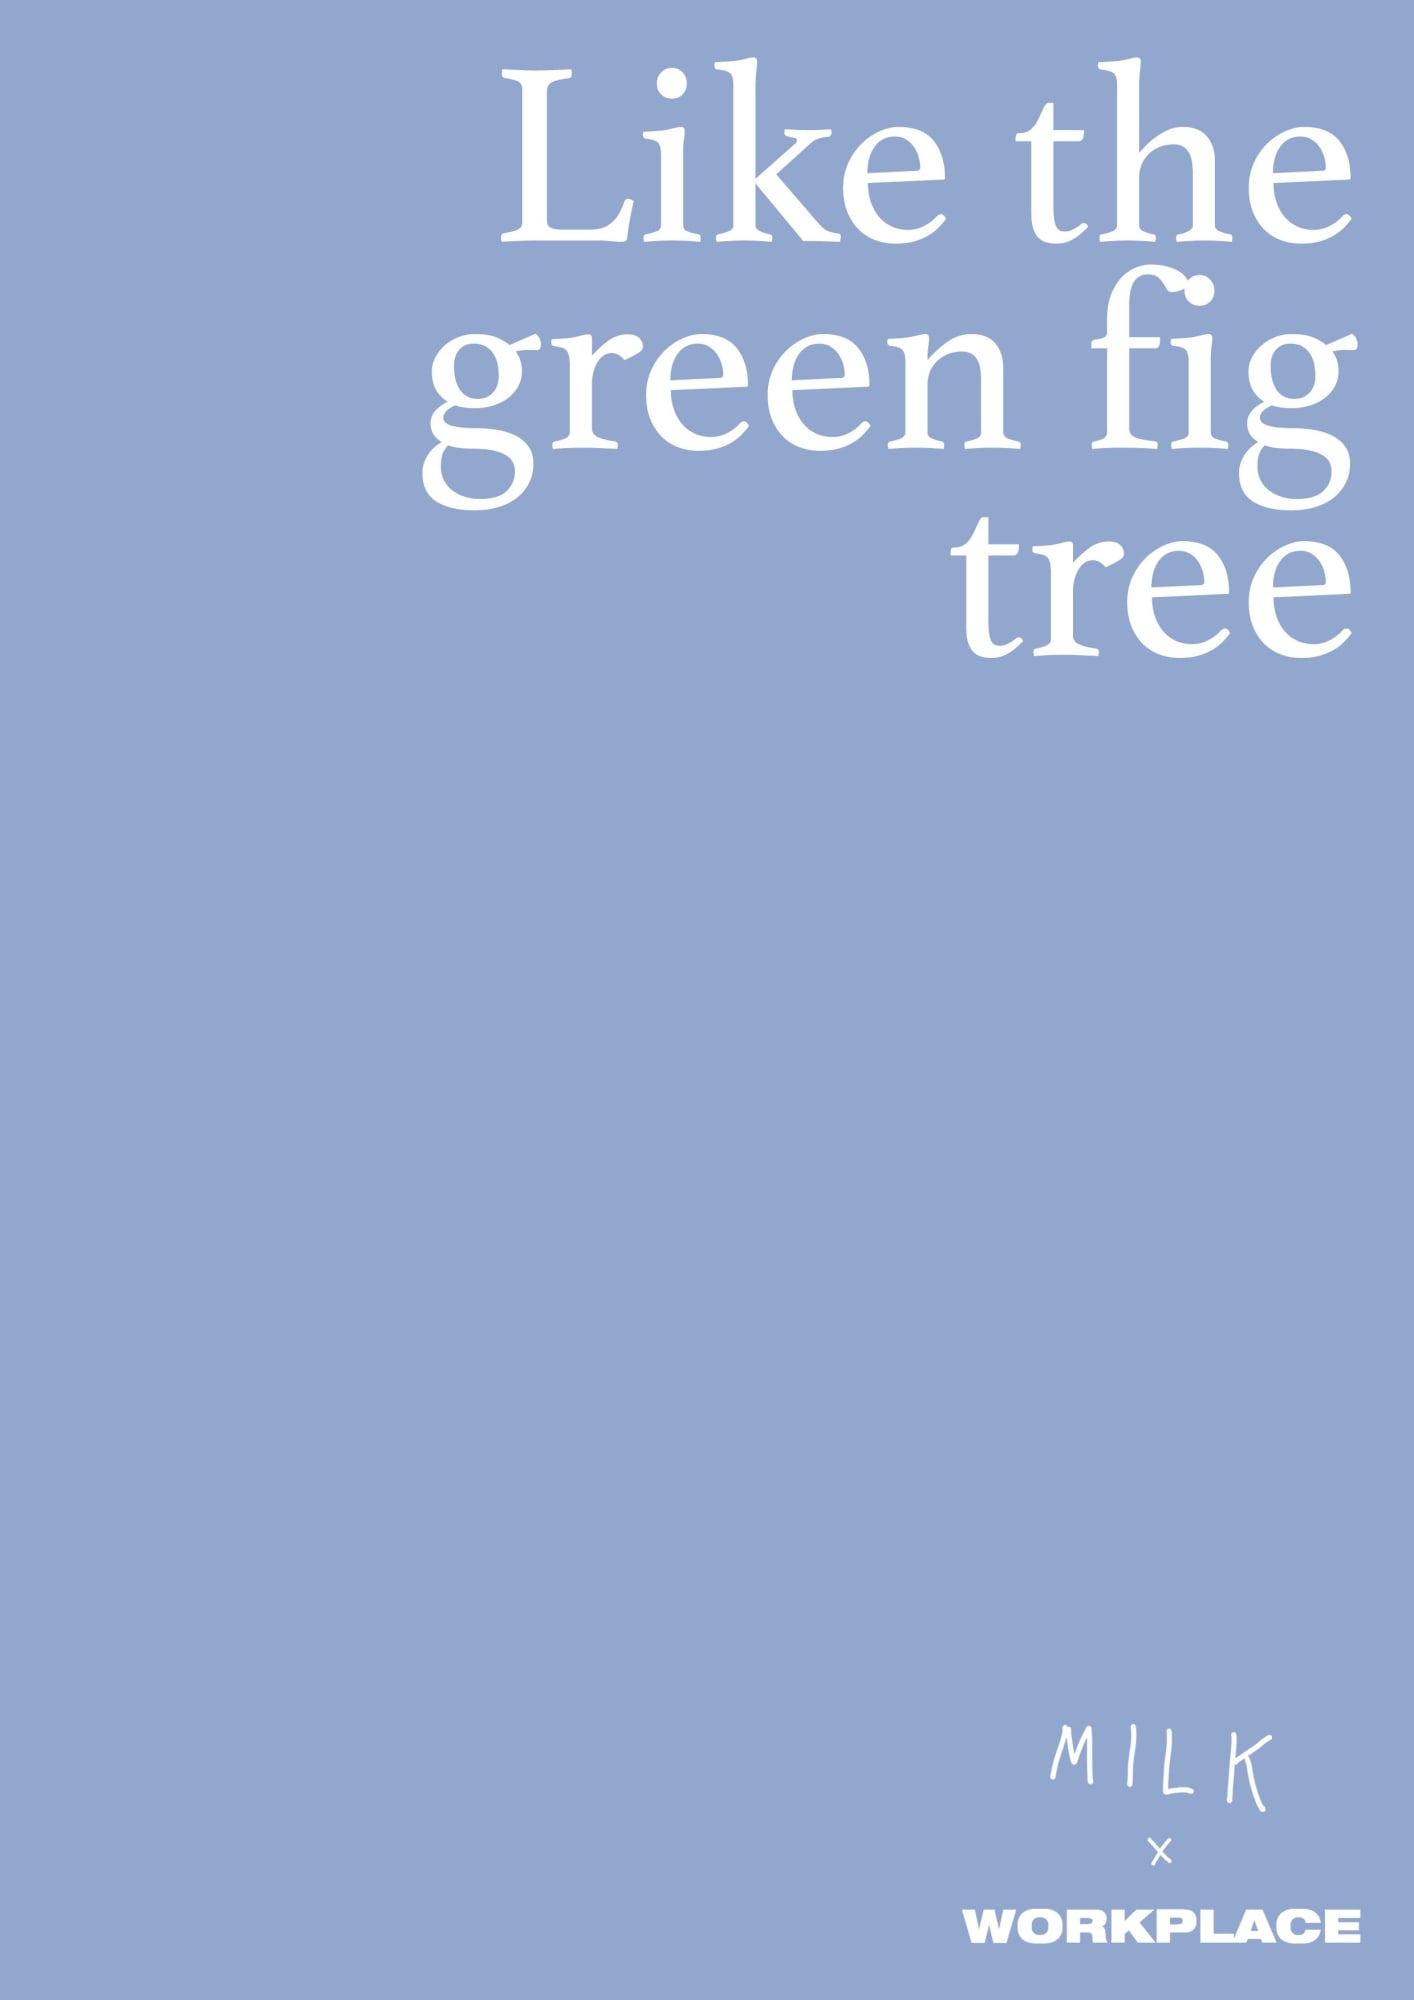 M I L K: Like the green fig tree